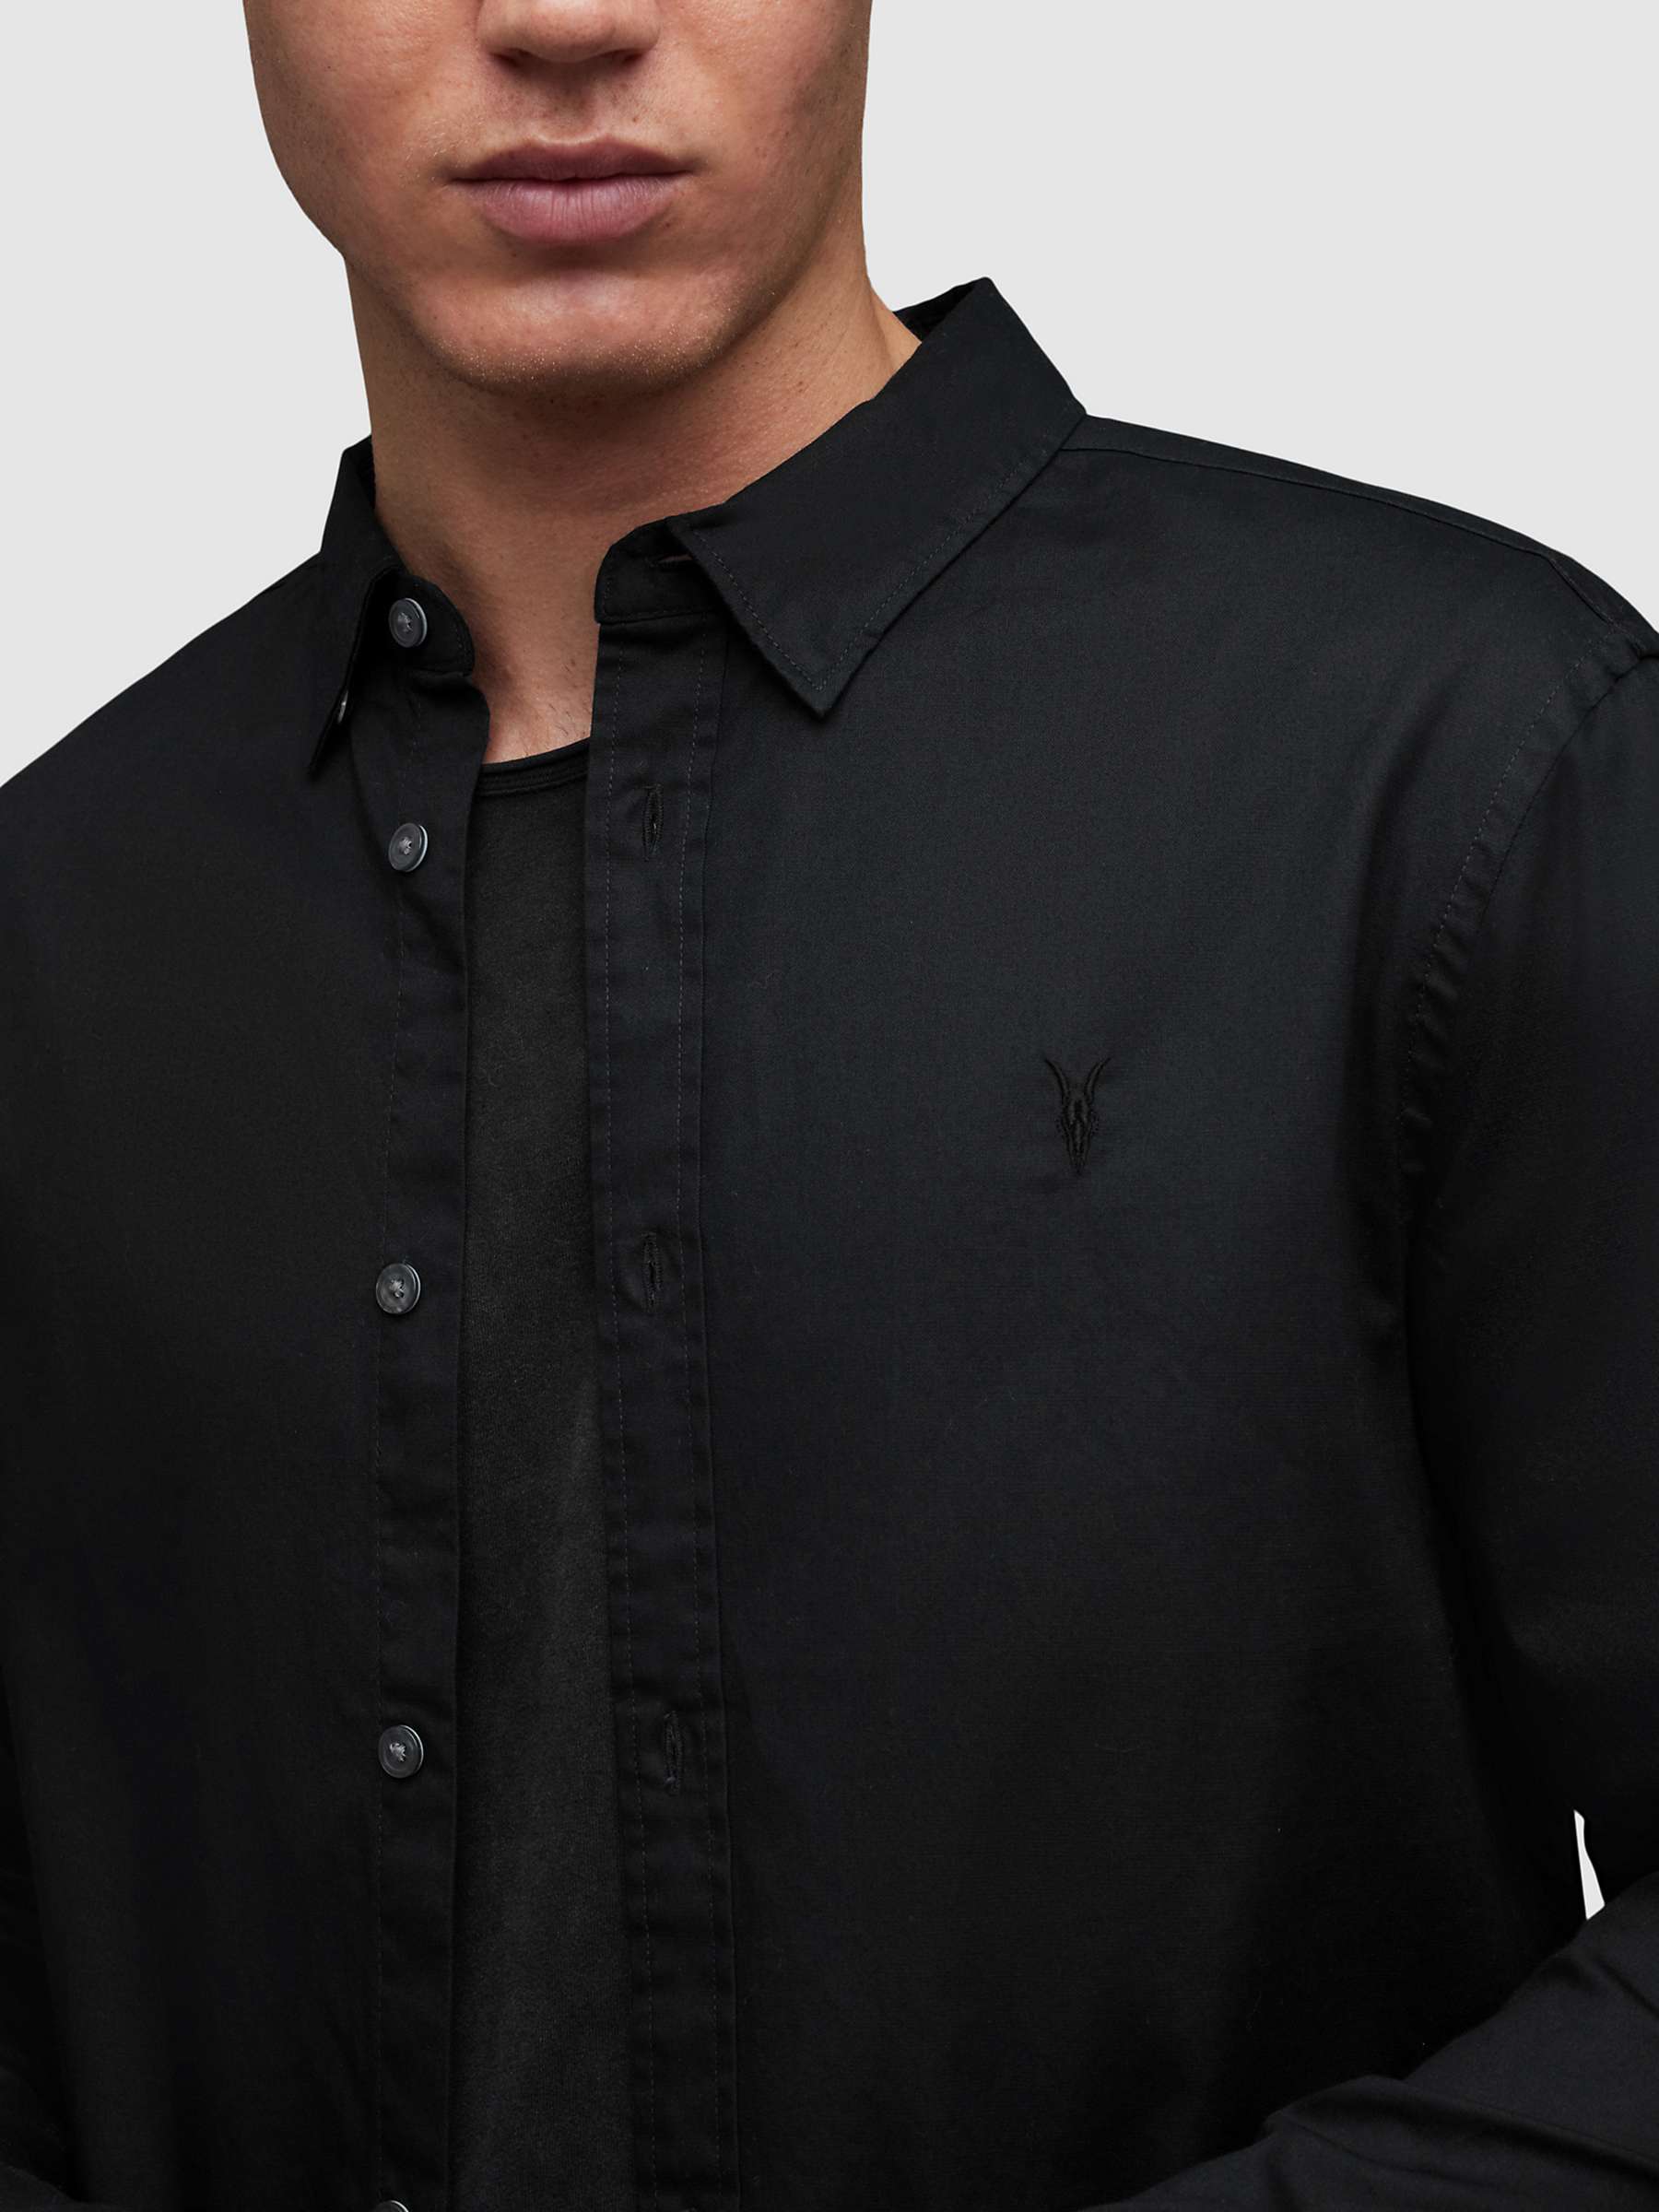 Buy AllSaints Hawthorne Long Sleeve Shirt Online at johnlewis.com